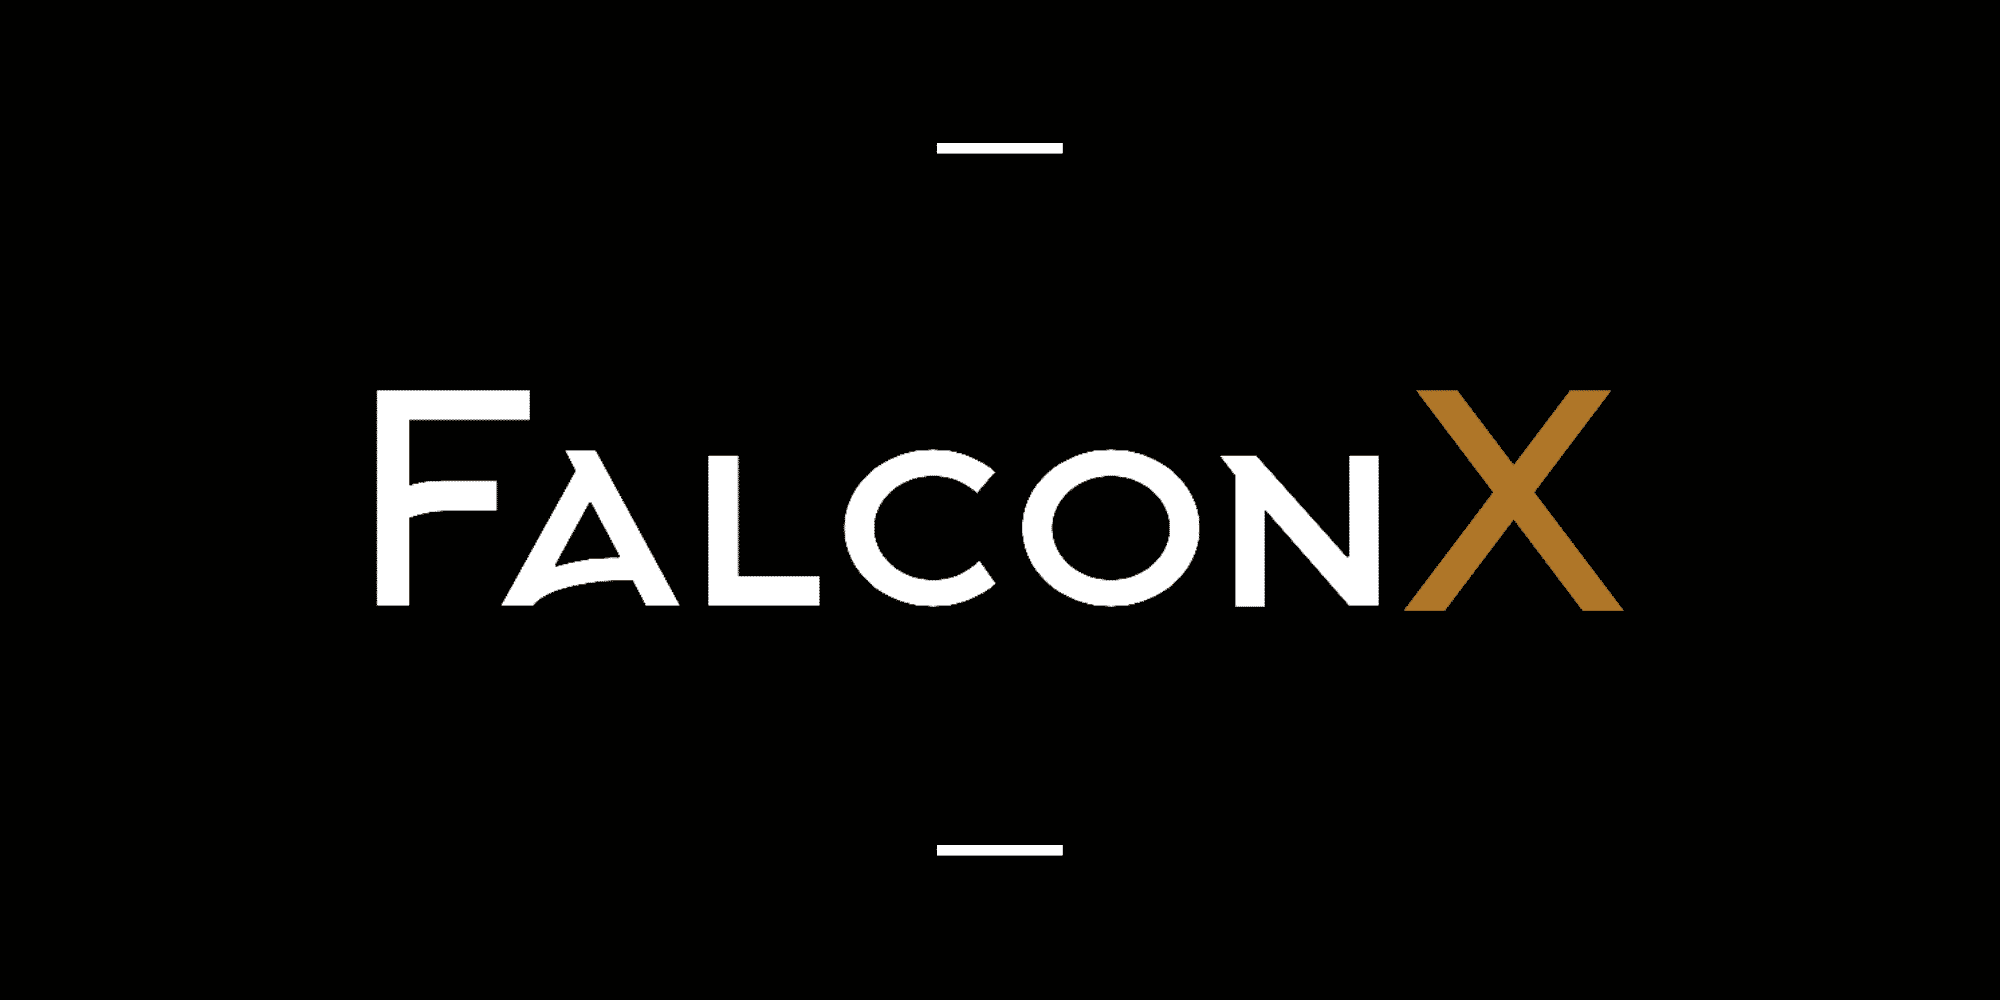 Institutional Investing Platform FalconX Recently Valued $3.75B